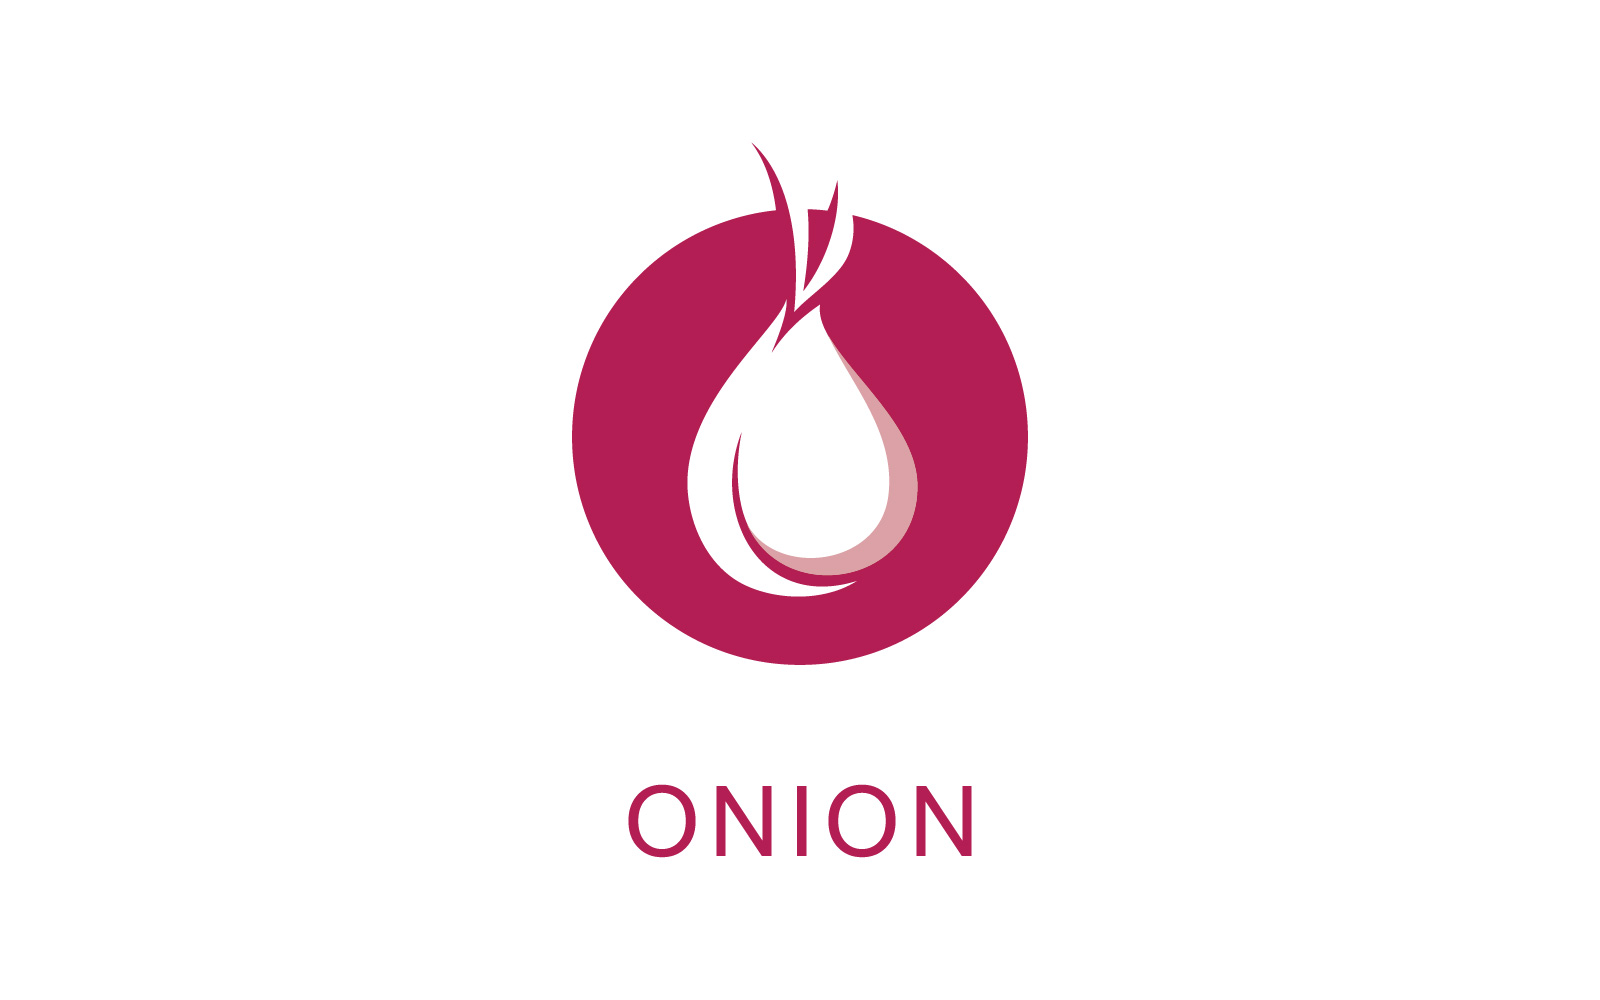 Onion Vector Template. Red Onion Logo Design V8